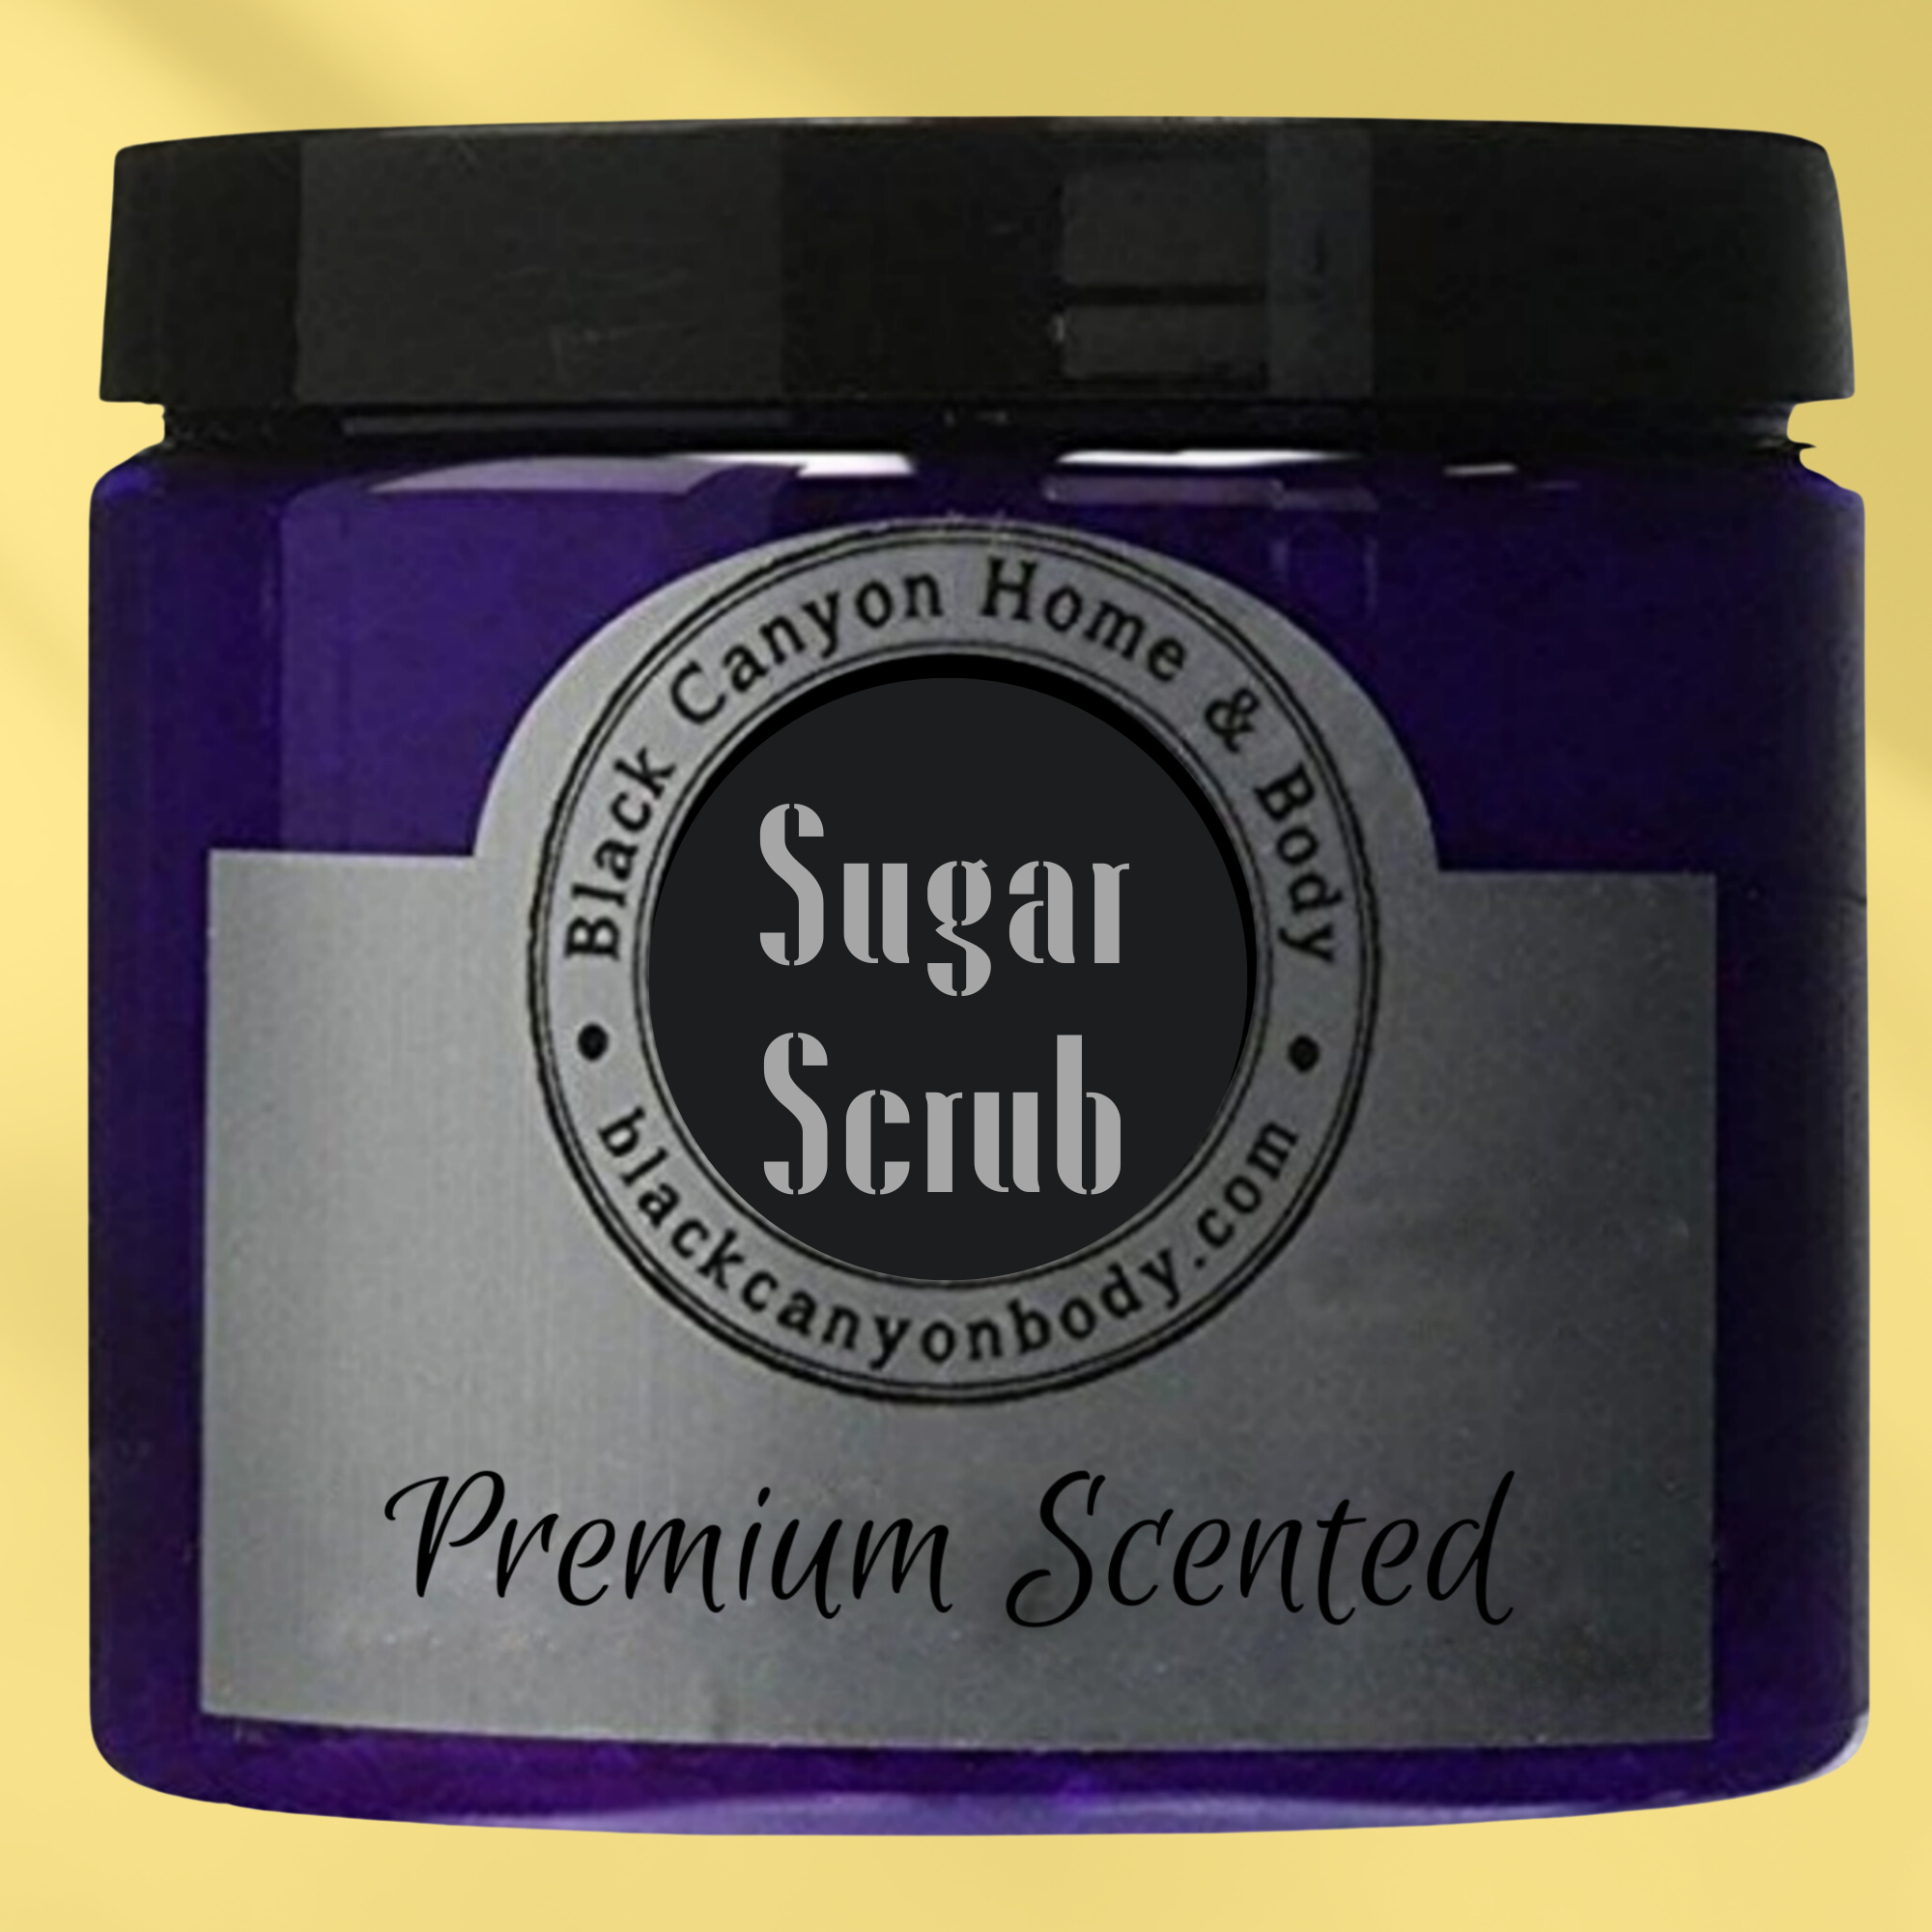 Black Canyon Bergamot & White Tea Scented Sugar Scrub